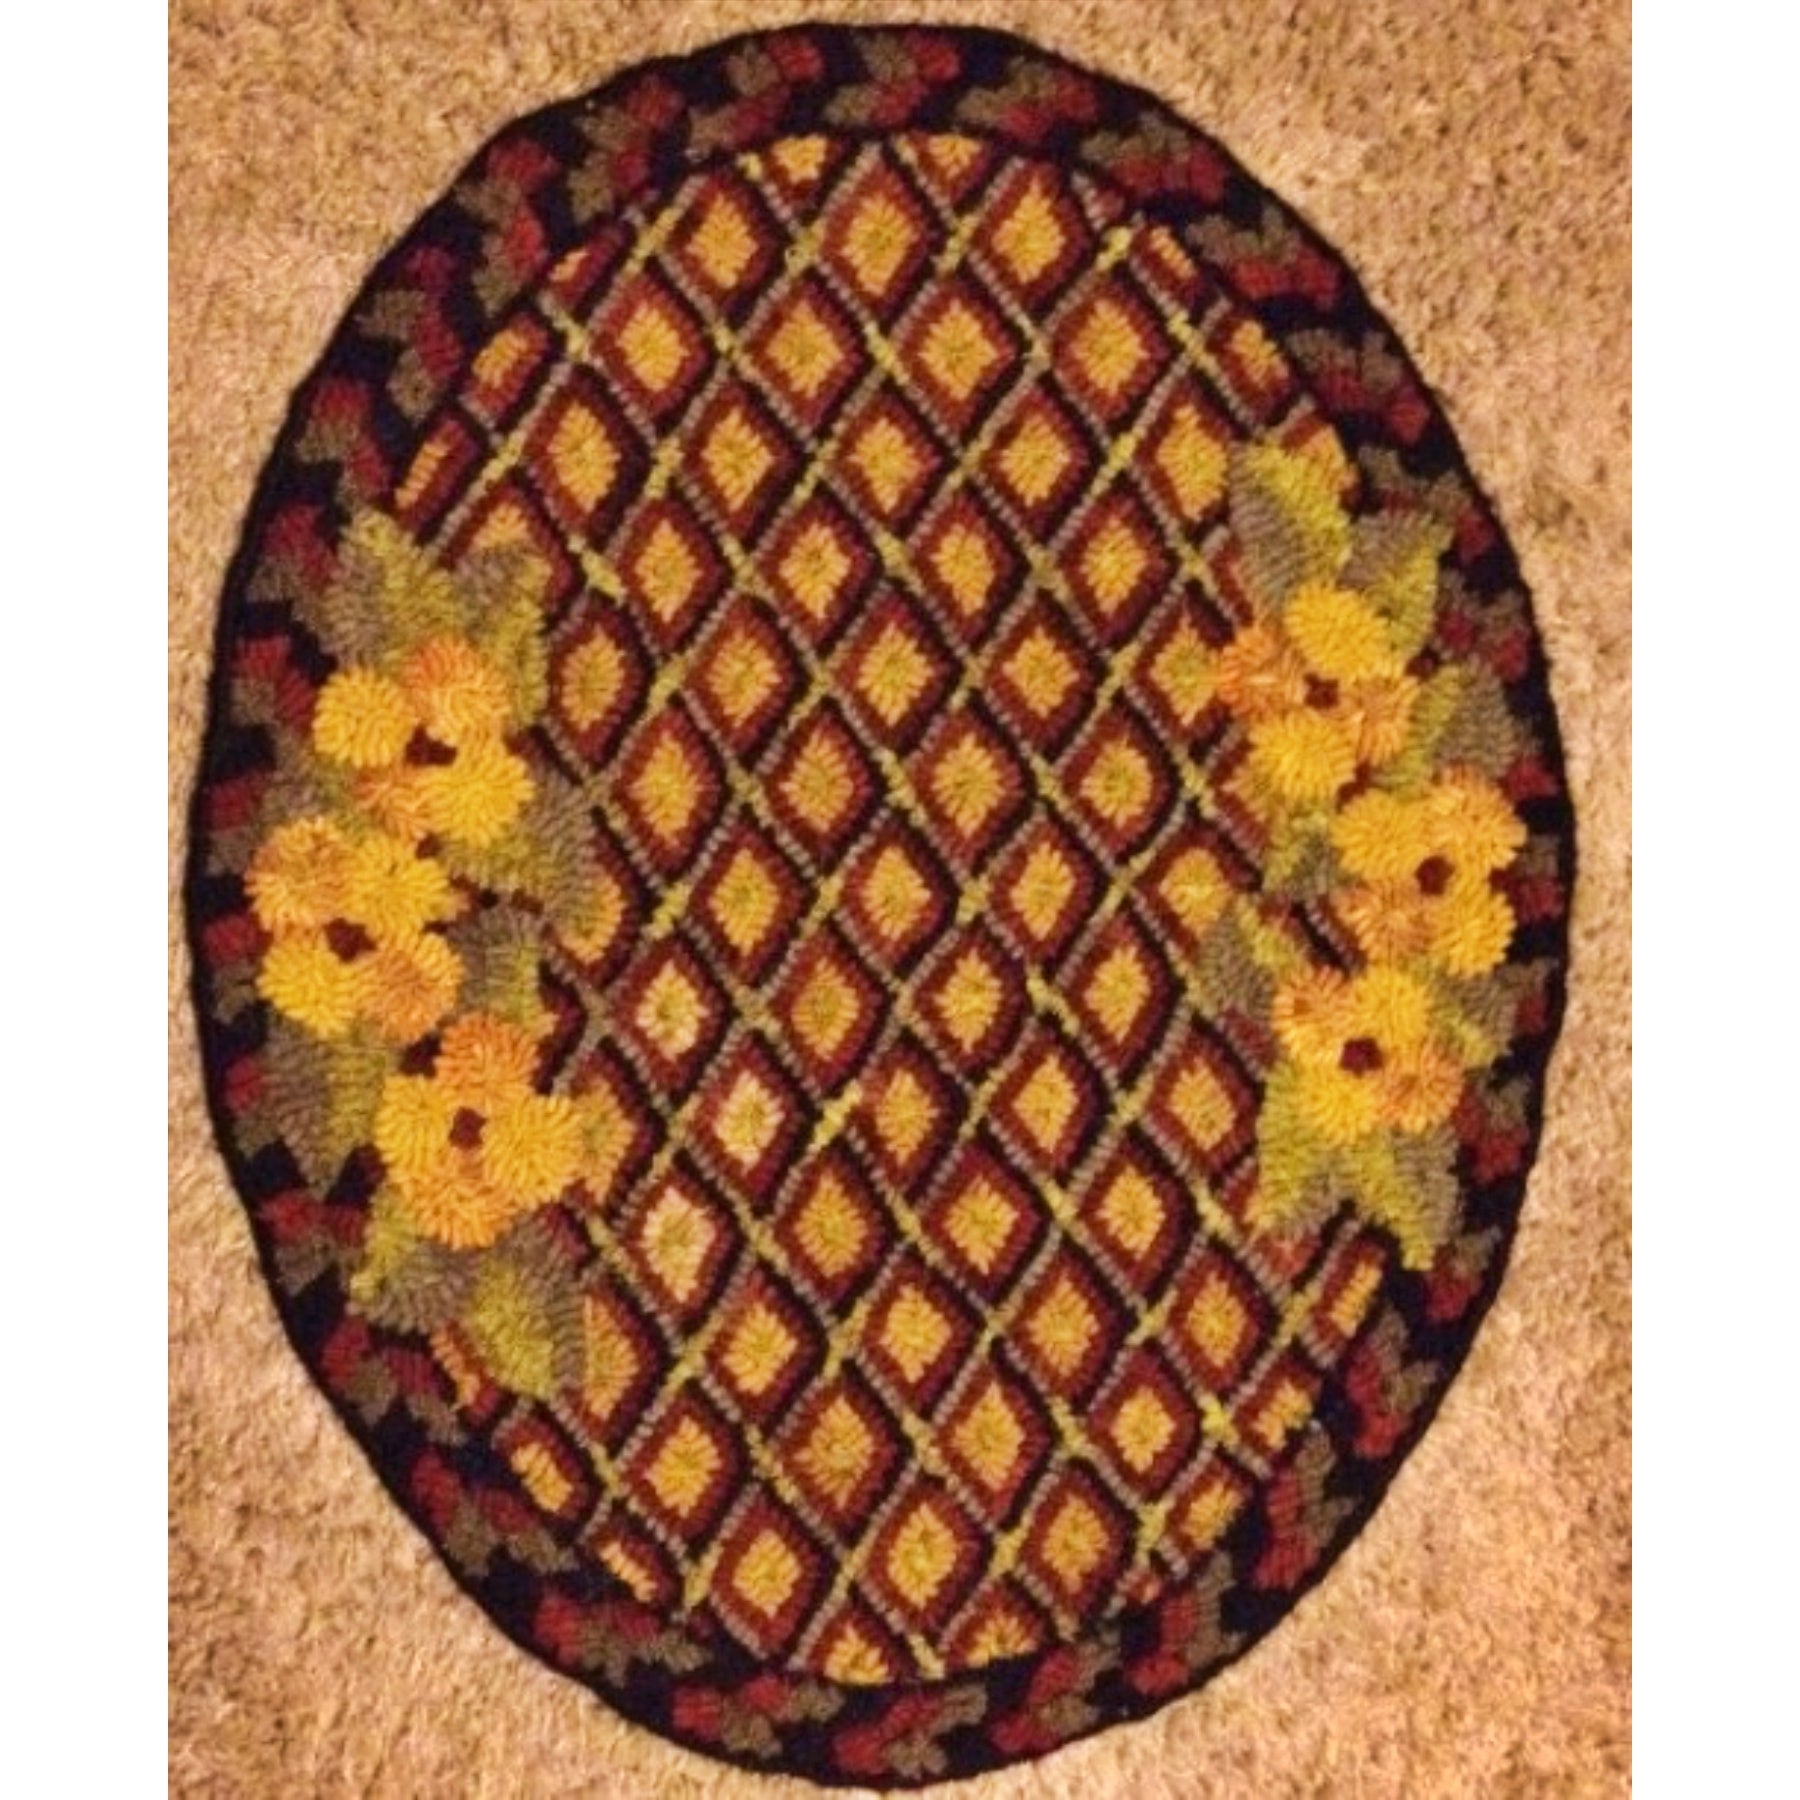 Grandmother's Rug, rug hooked by Joyce DiGregorio